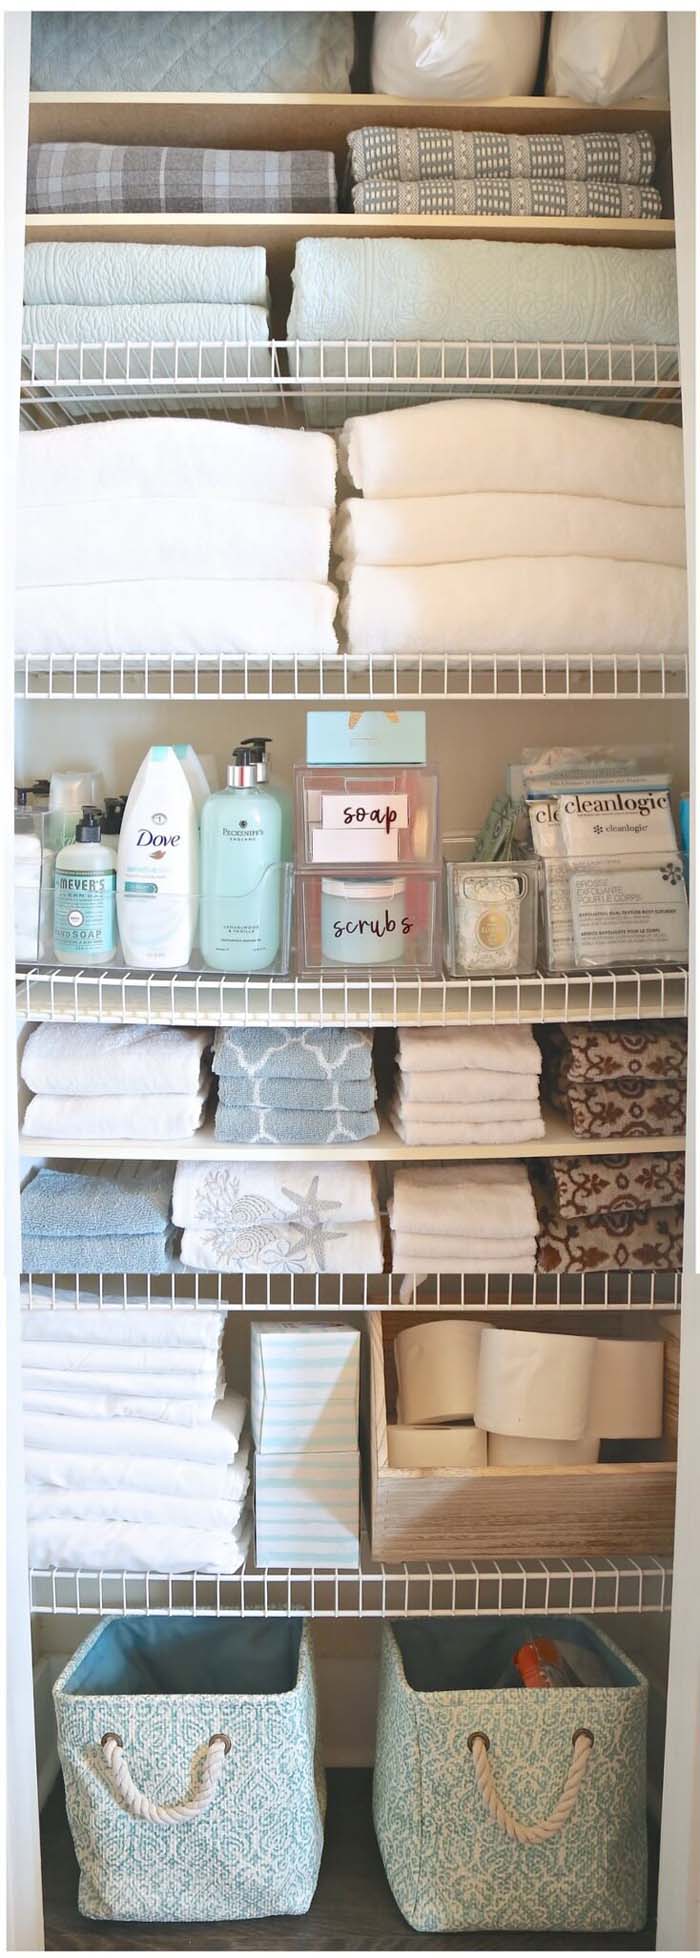 Linen Closet Organizing #bathroom #towel #storage #decorhomeideas